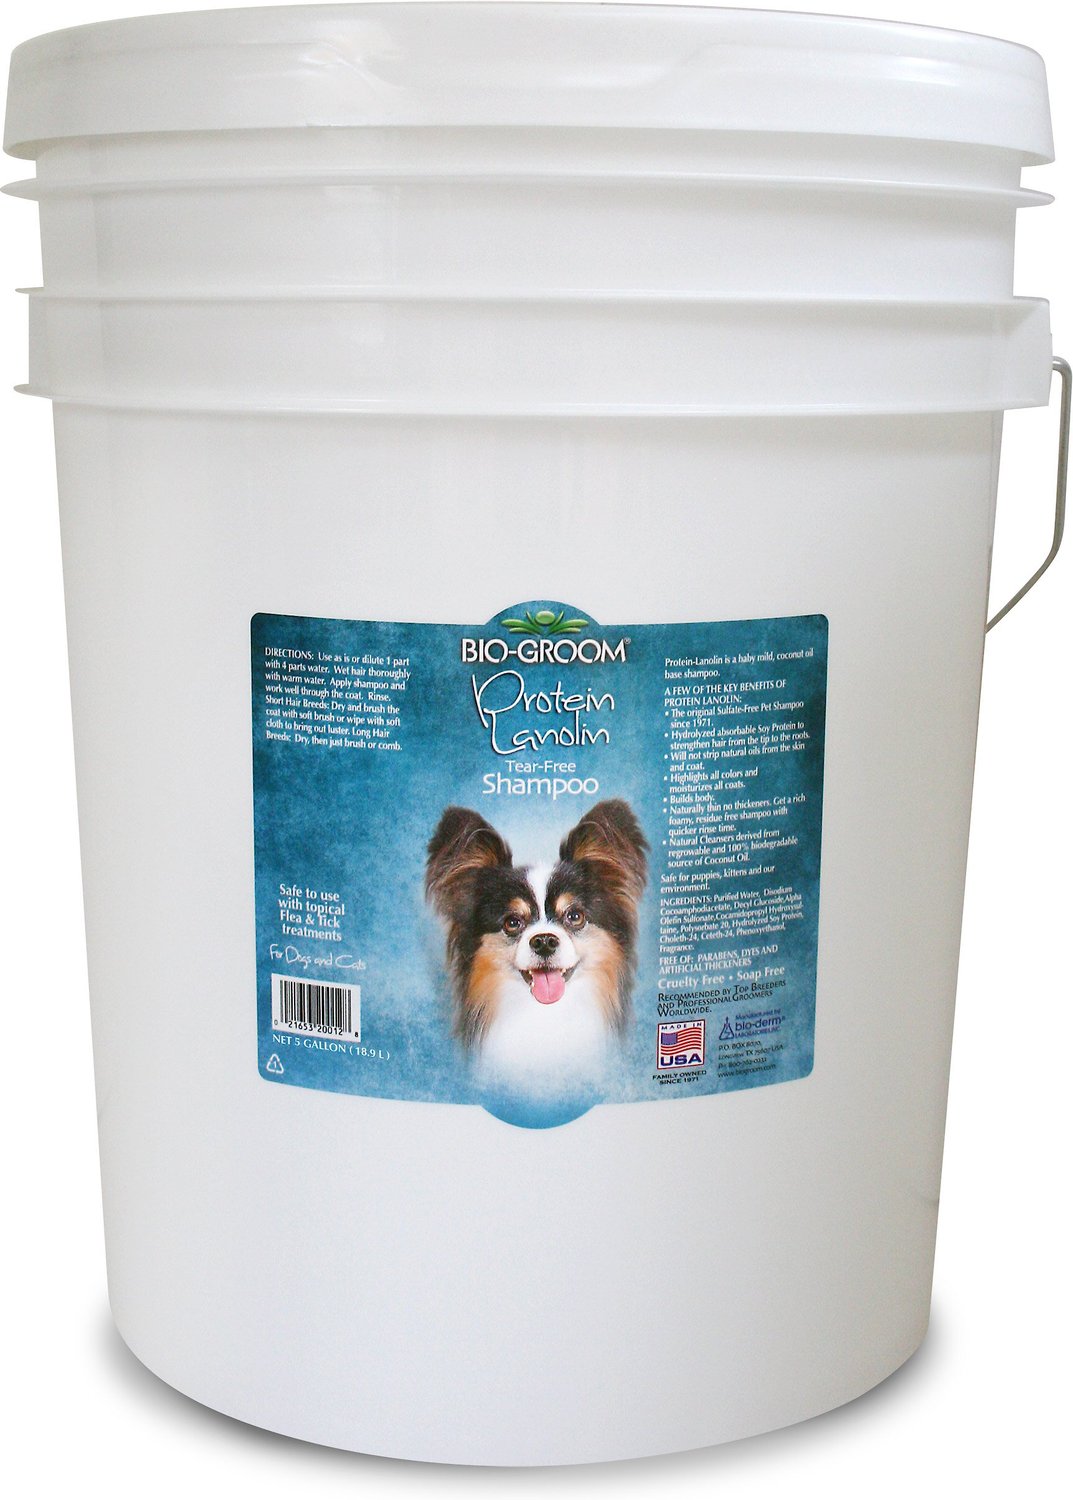 BIO-GROOM Dog Tear-Free Protein Lanolin Dog Shampoo, 5-gallon pail - Chewy.com